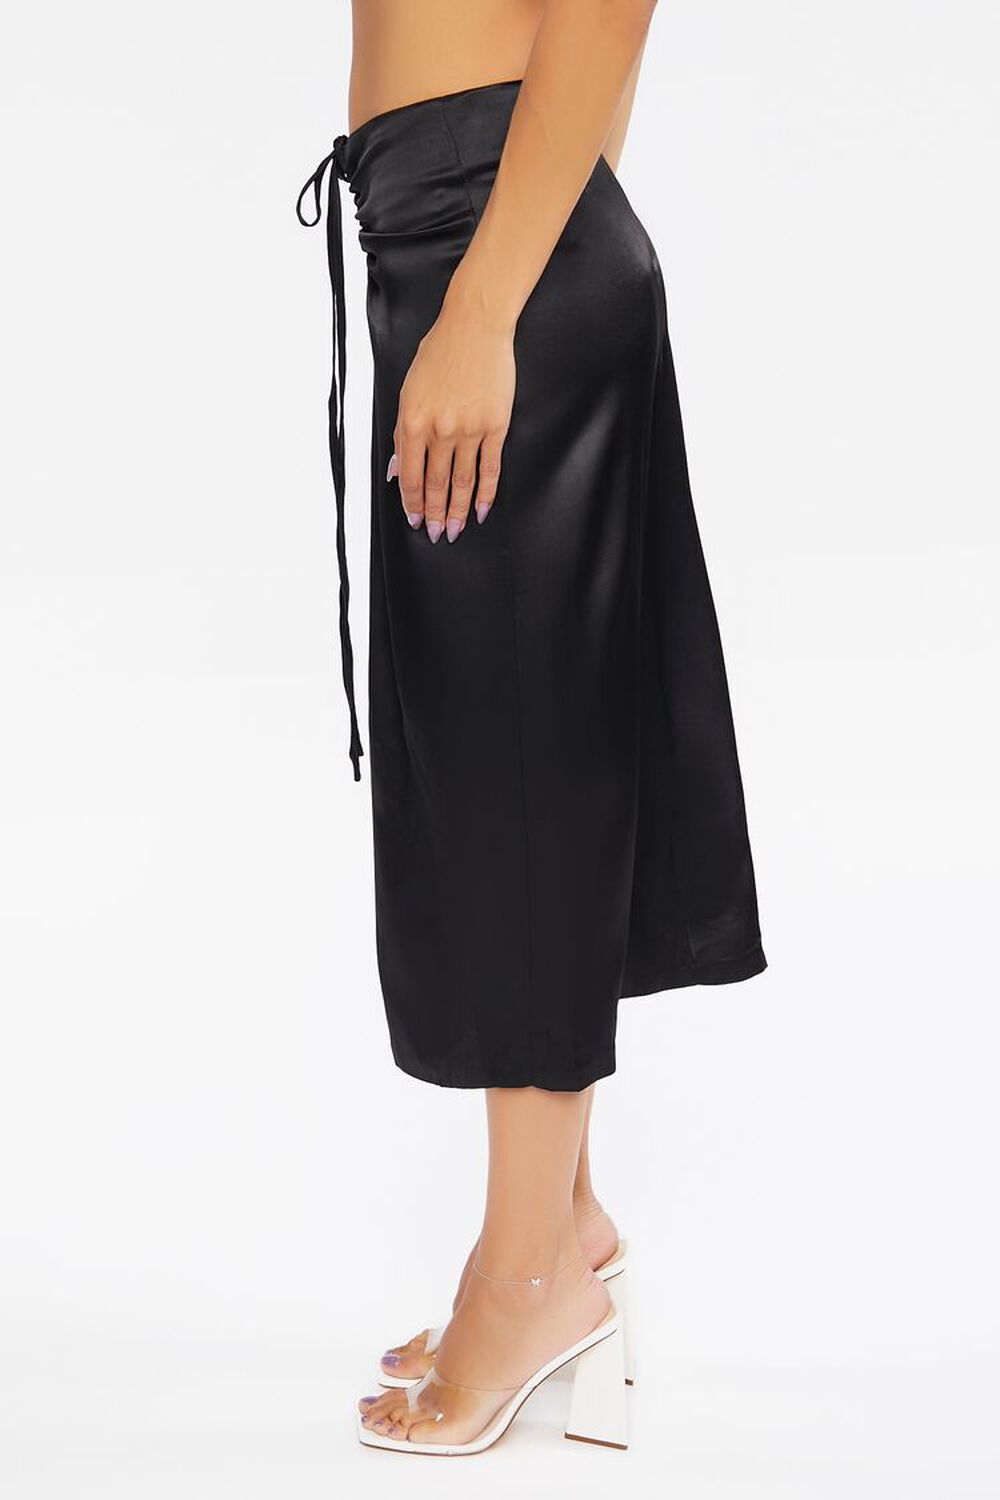 BLACK Knotted Midi Skirt, image 3